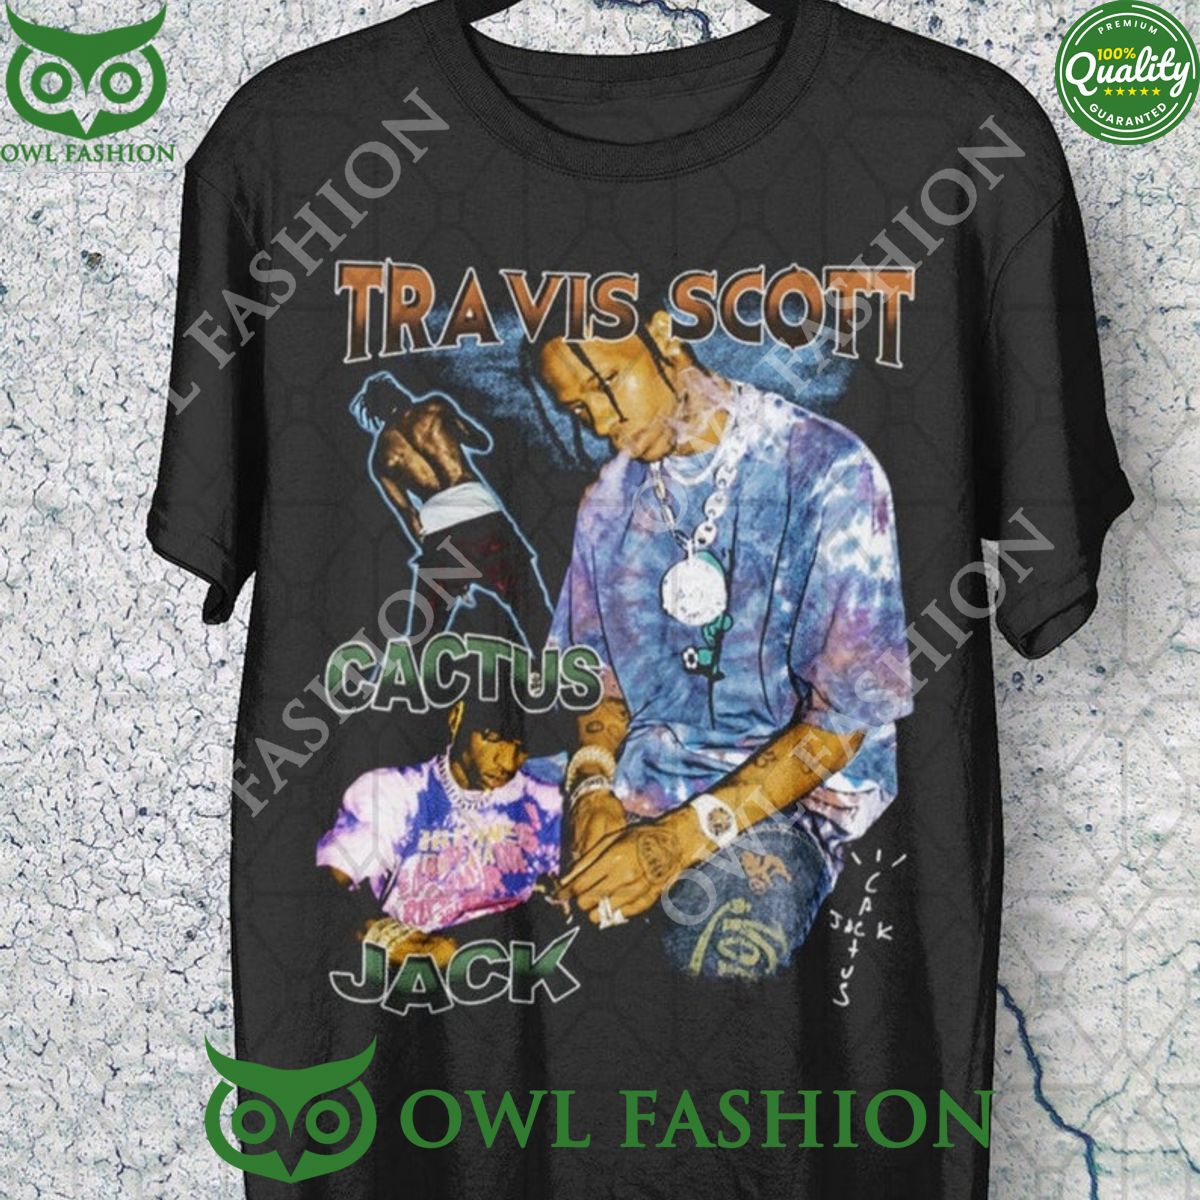 Jack Travis Scott Cactus T Shirt Best picture ever